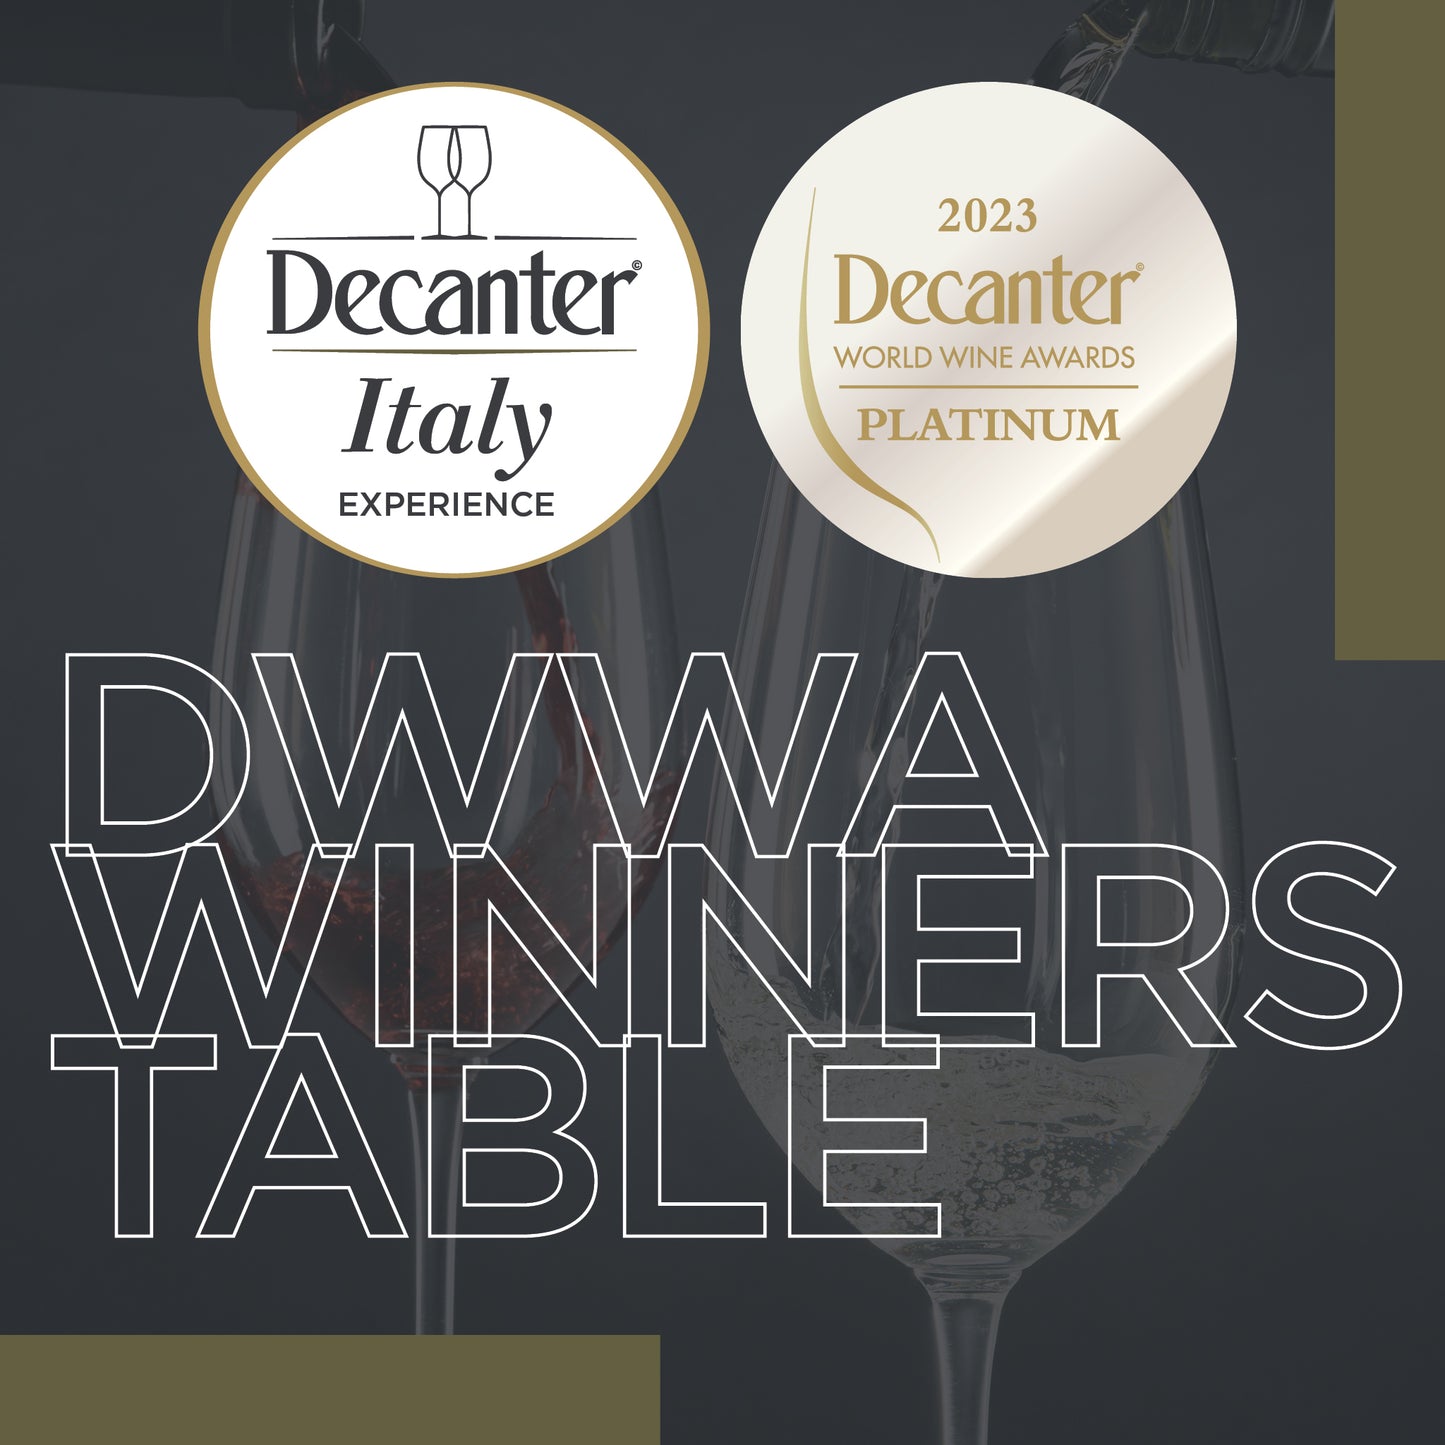 DWWA 2023 PLATINUM registration – Decanter Italy Experience